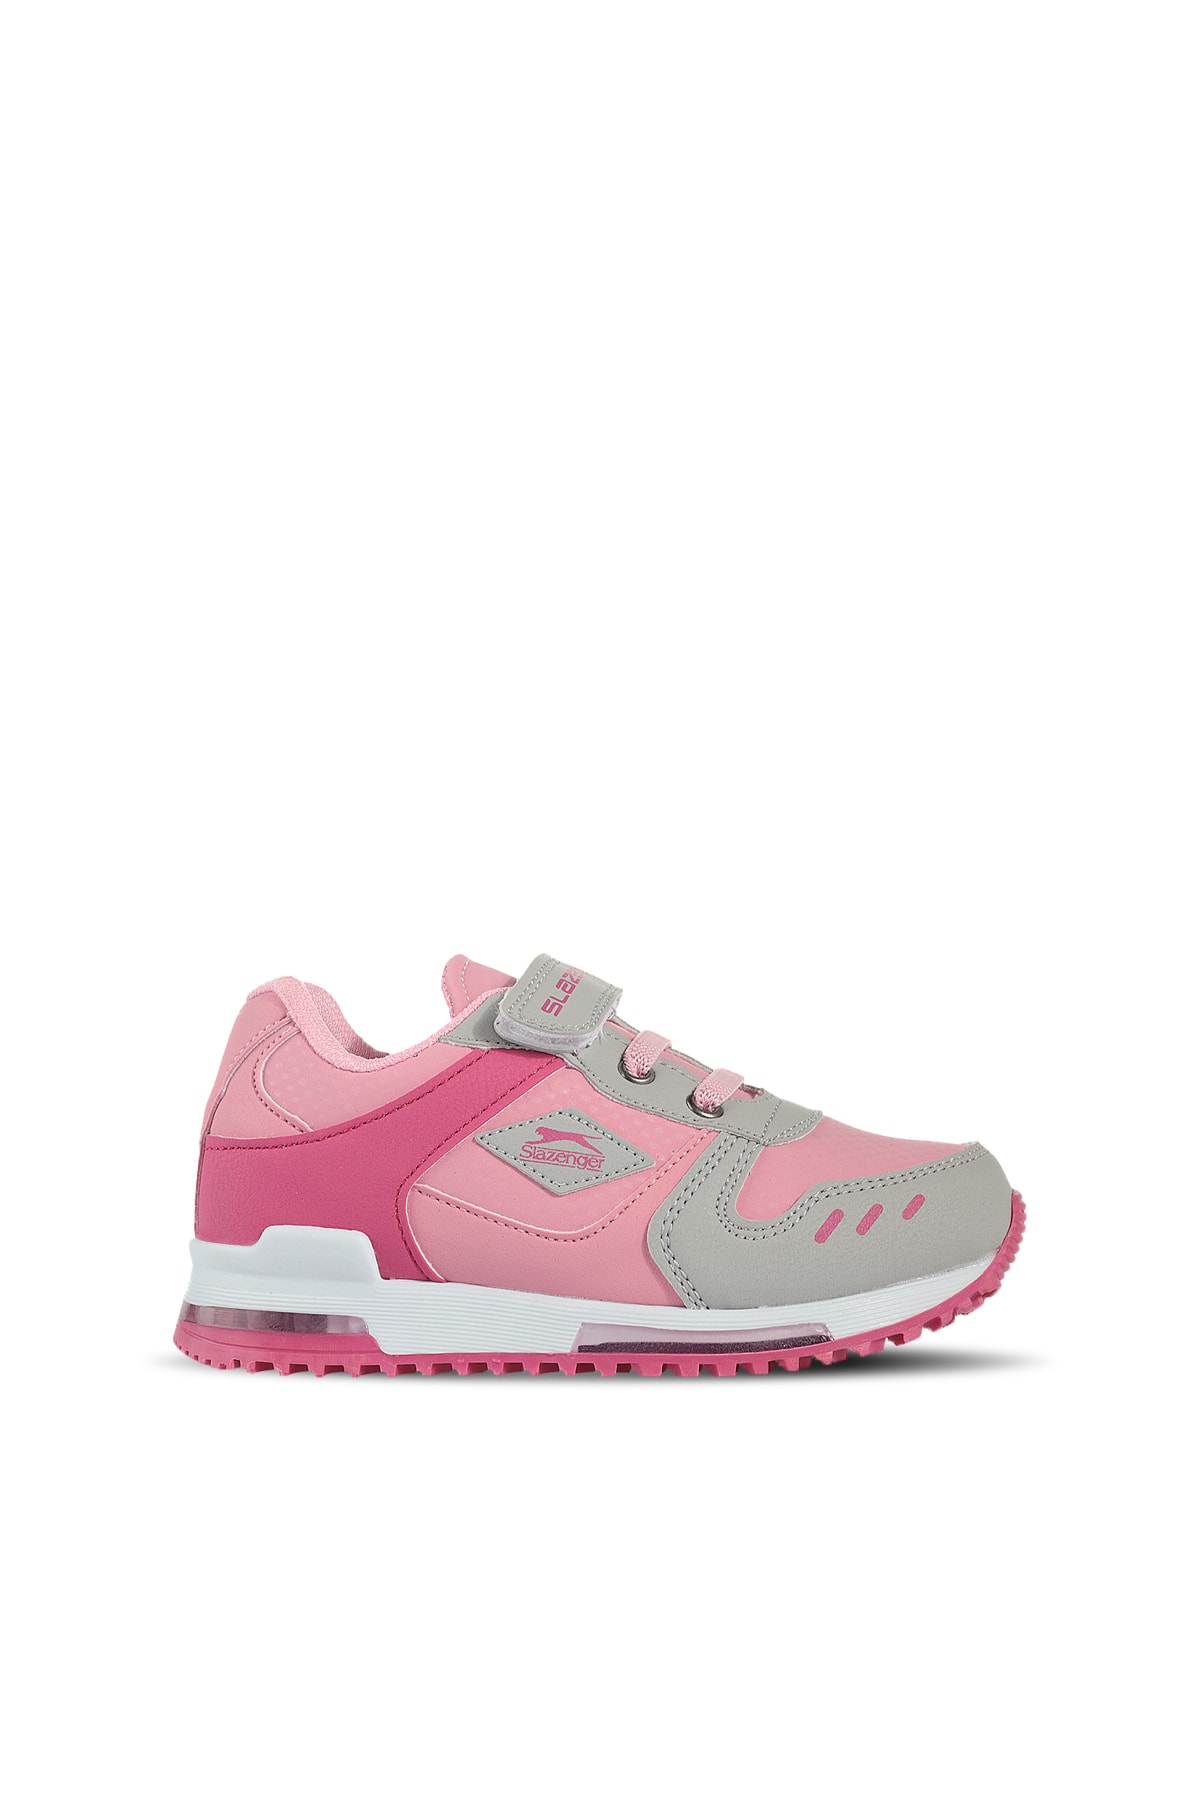 Levně Slazenger Edmond Sneaker Girls' Shoes Grey / Pink